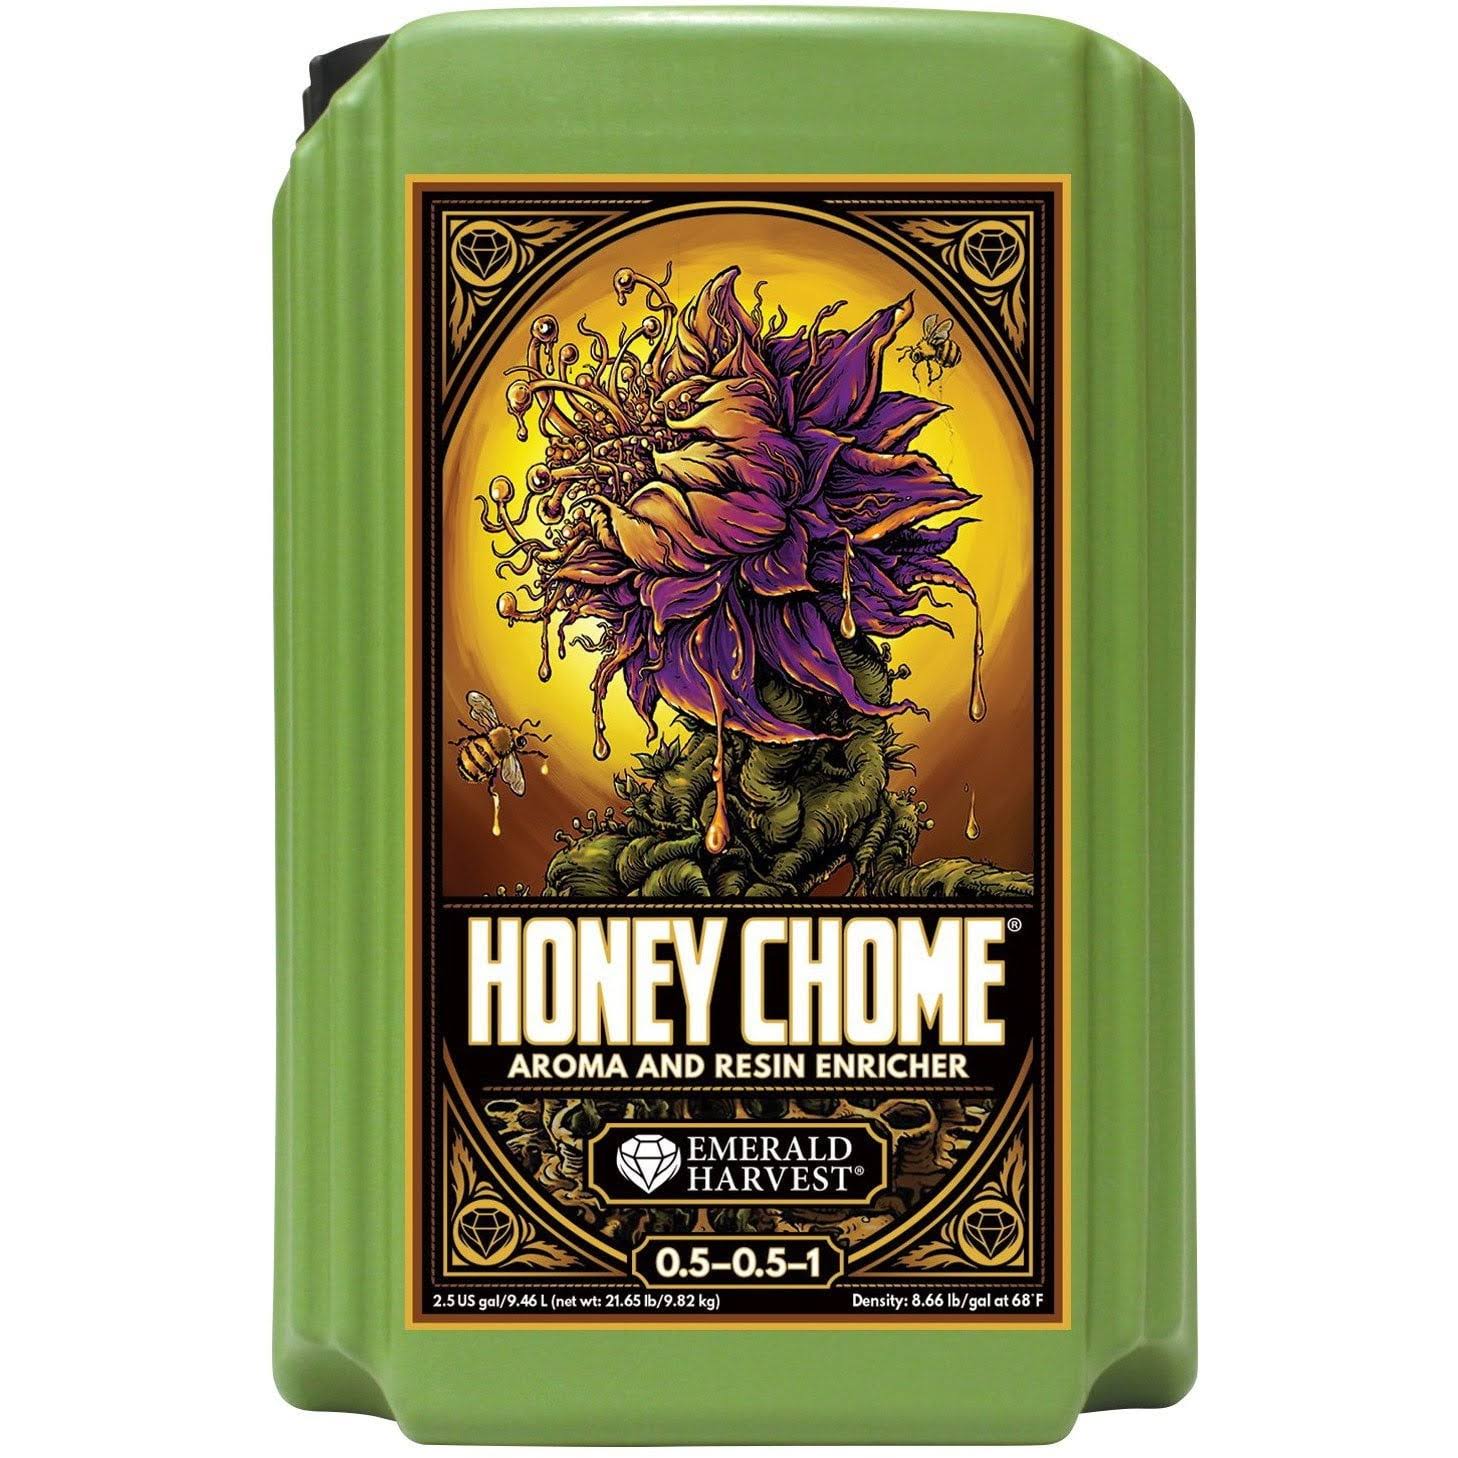 Emerald Harvest Honey Chrome - 9.46l